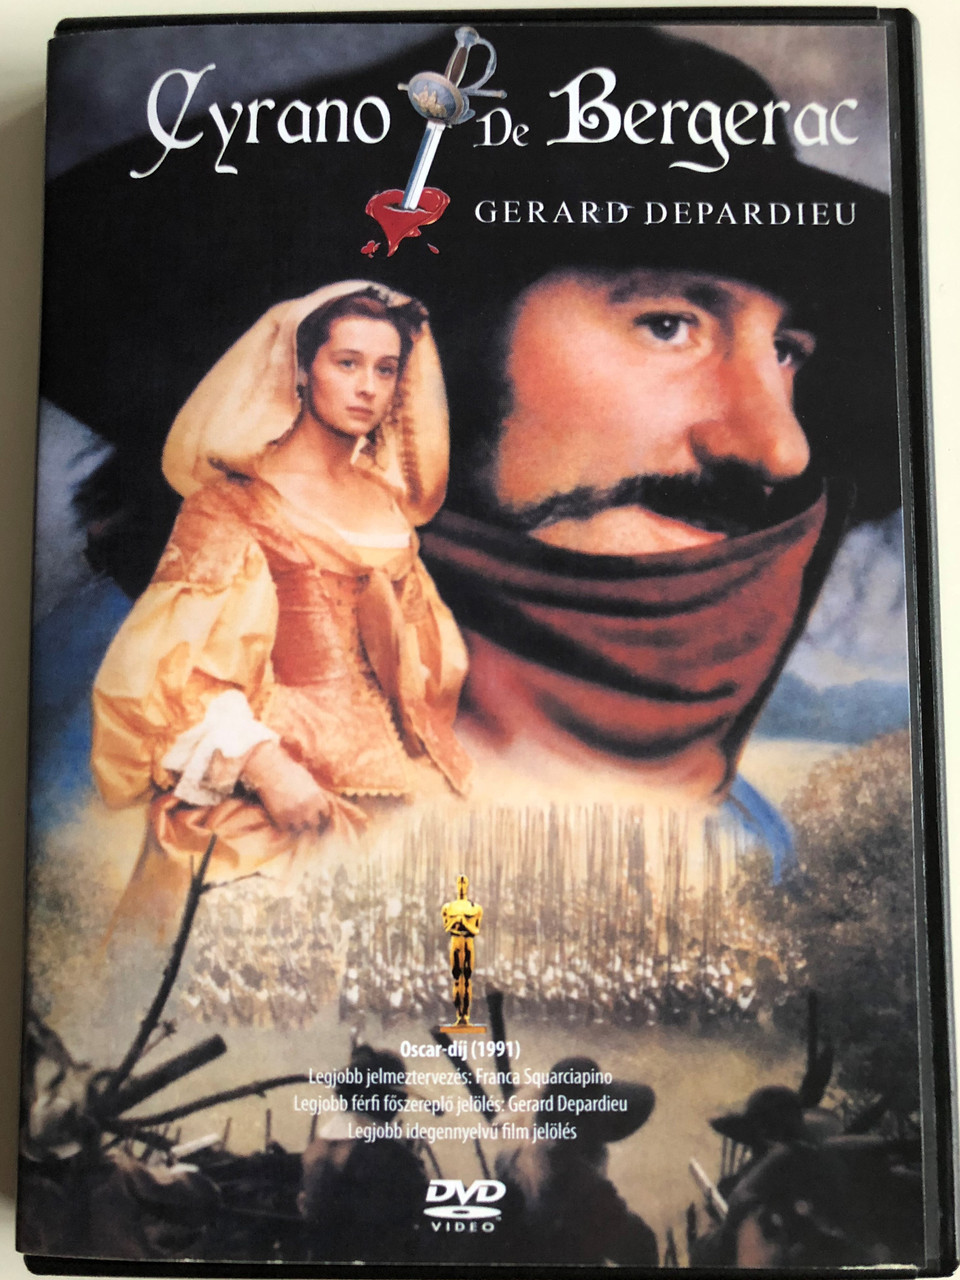 Cyrano de Bergerac DVD 1990 / Directed by Jean-Paul Rappeneau / Starring:  Gérard Depardieu, Anne Brochet, Vincent Perez - bibleinmylanguage